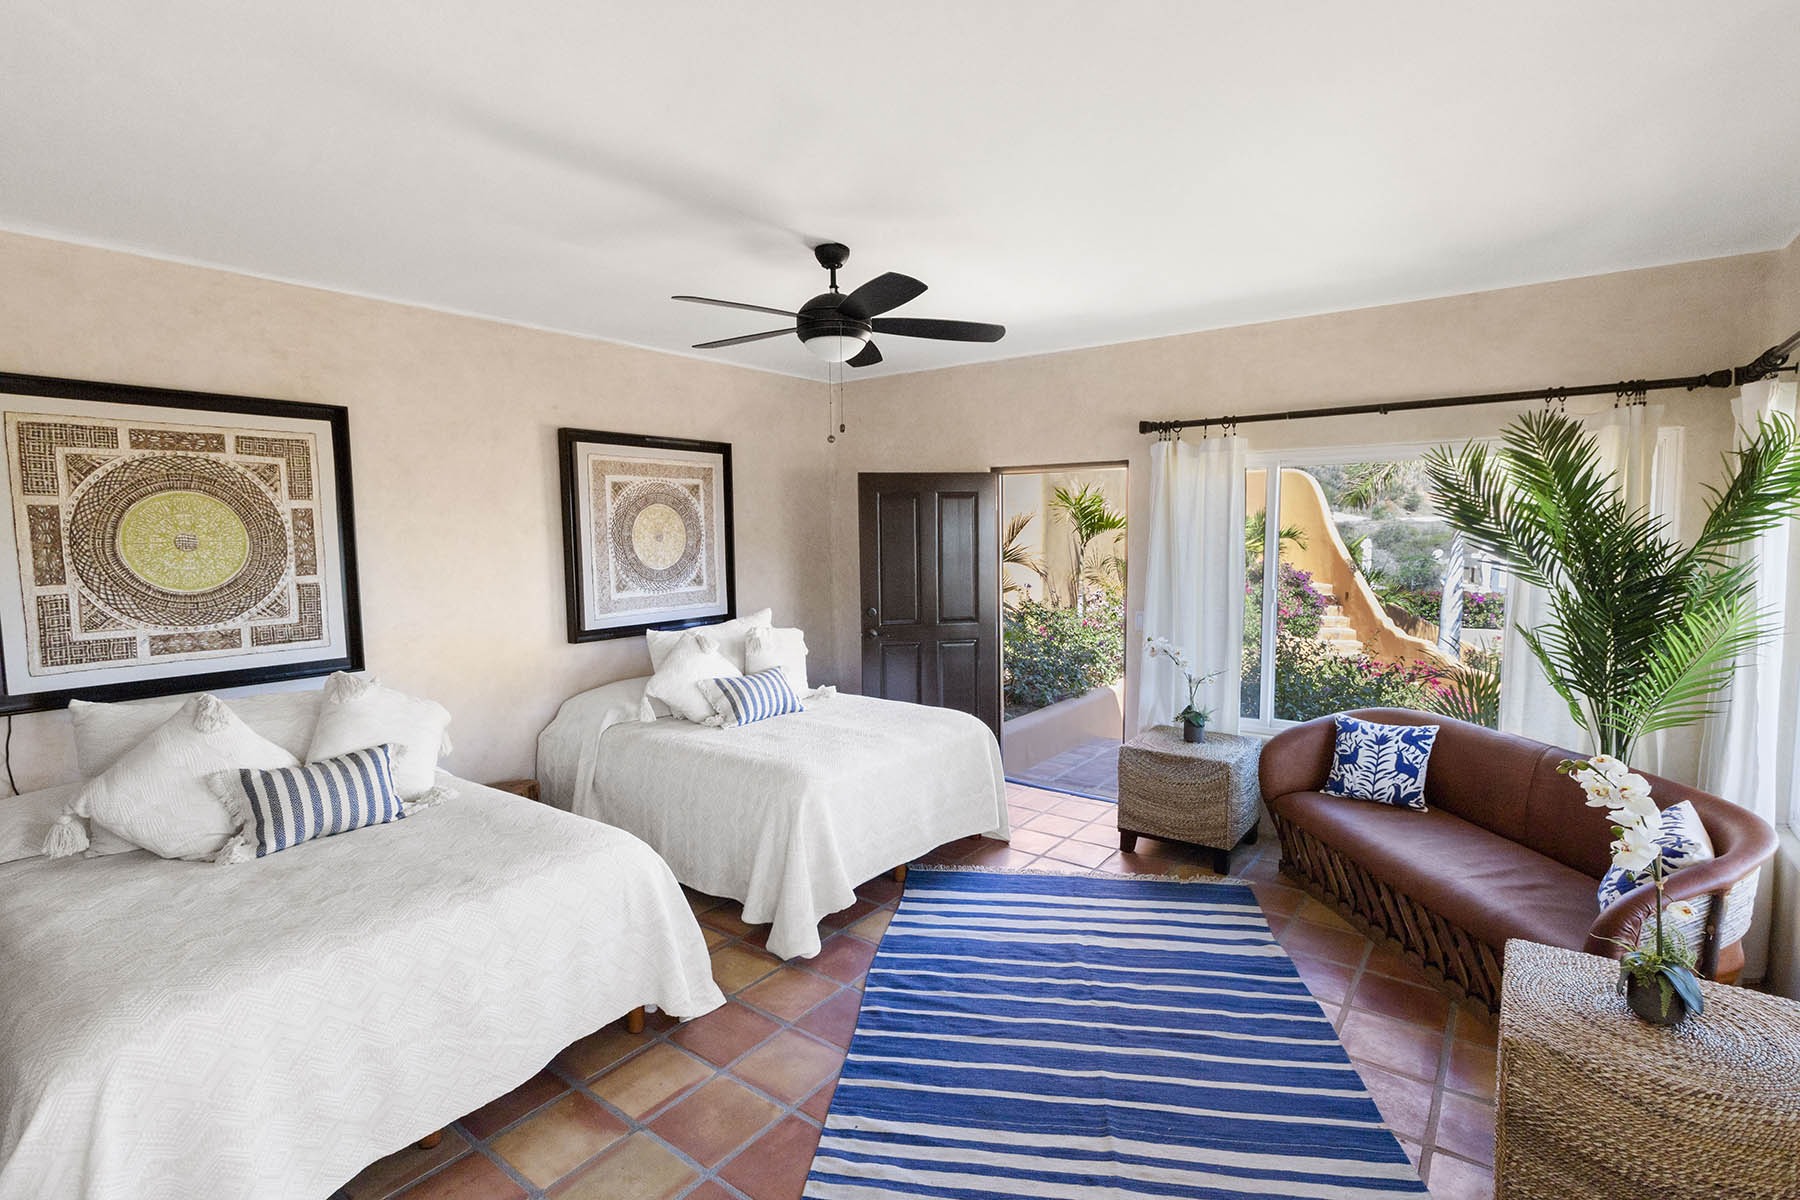 The Casita of A Luxury Resort-Style Villa in Cabo San Lucas, Mexico